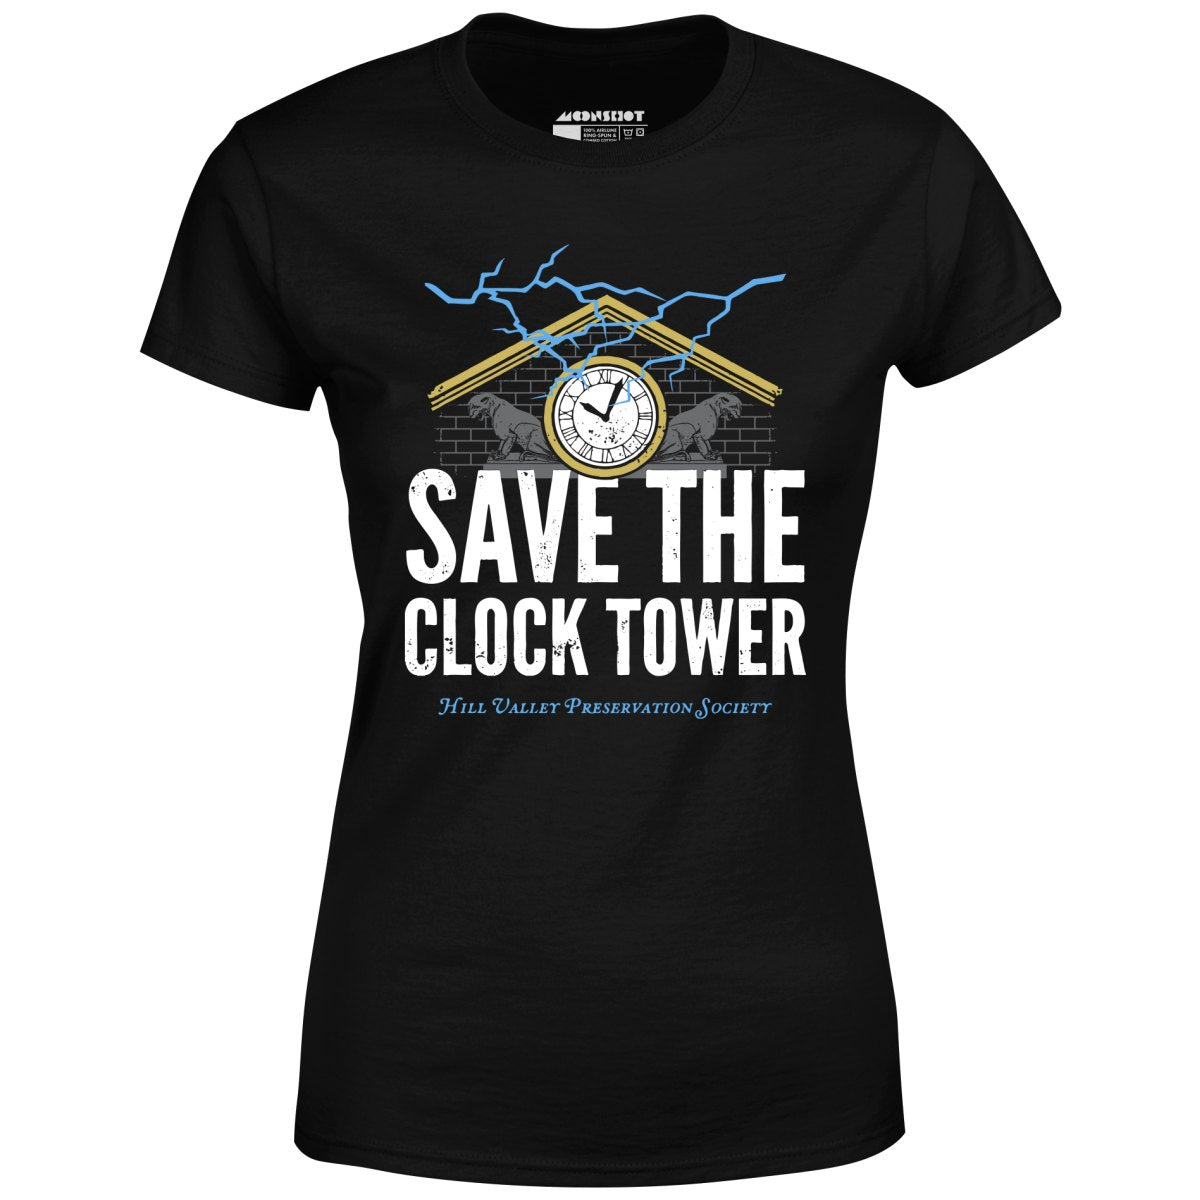 Save the Clock Tower - Women's T-Shirt